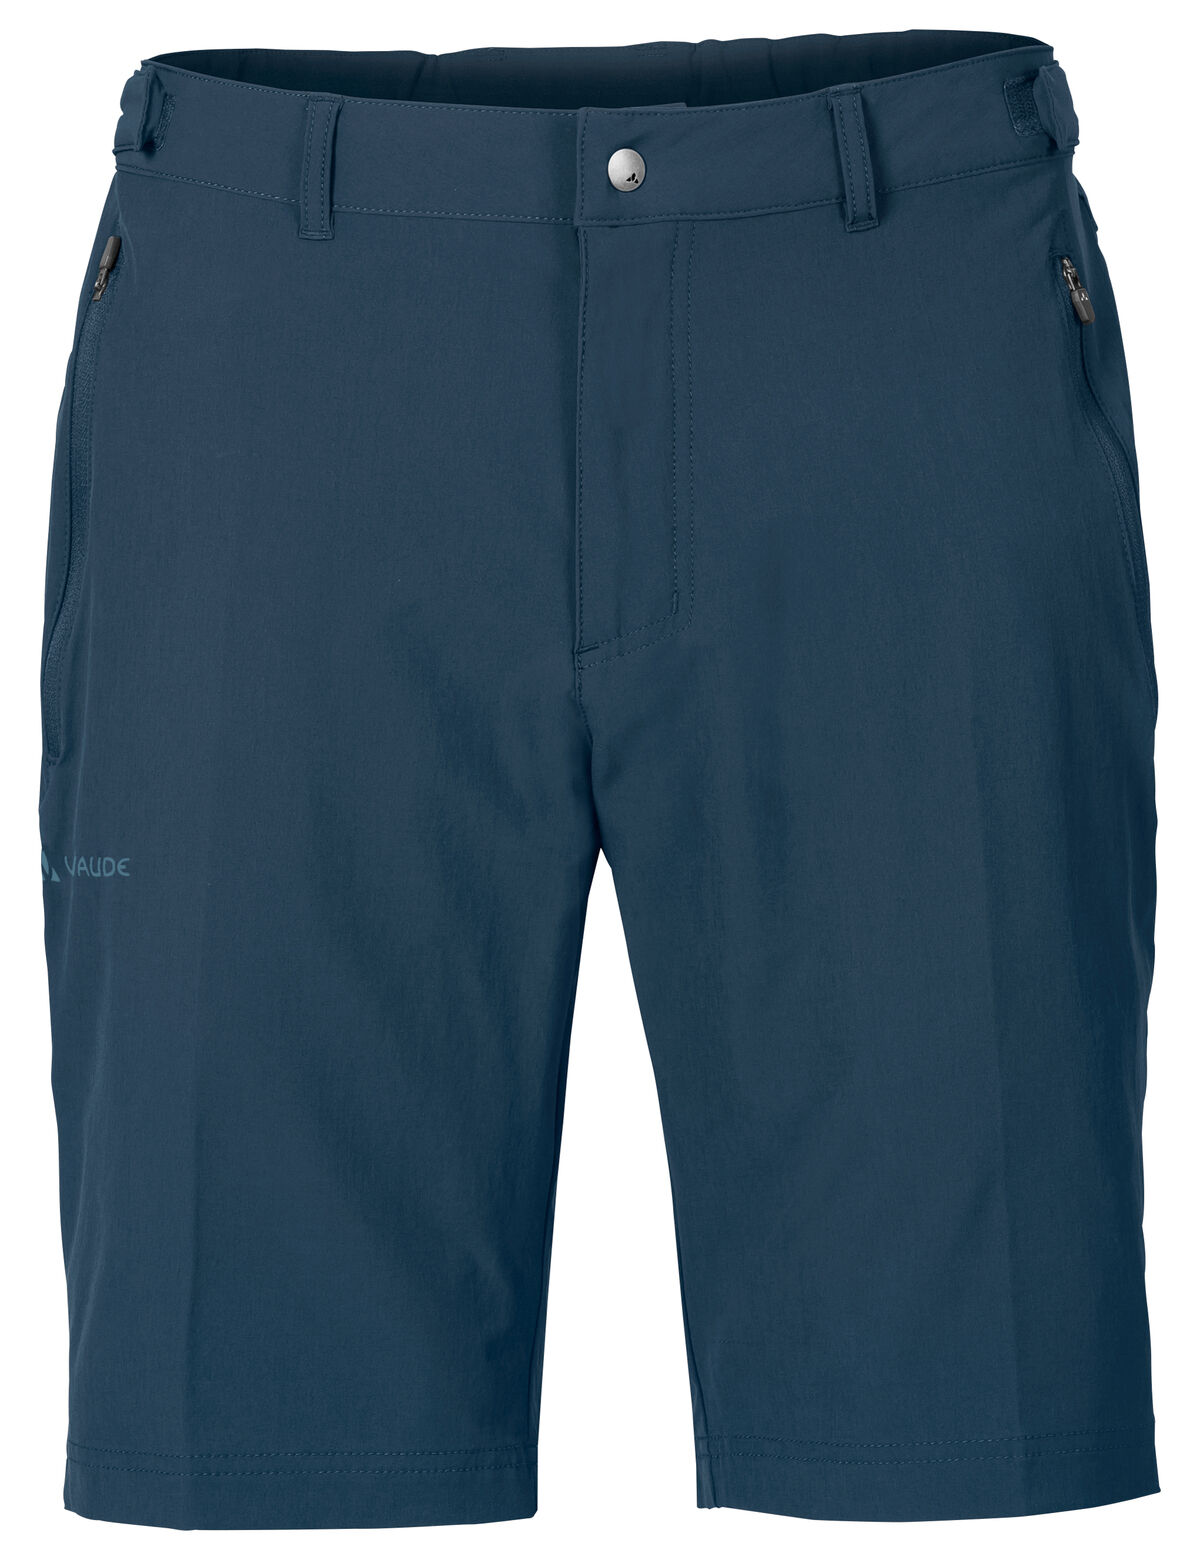 Vaude Farley Stretch Bermuda - Hiking shorts - Men's